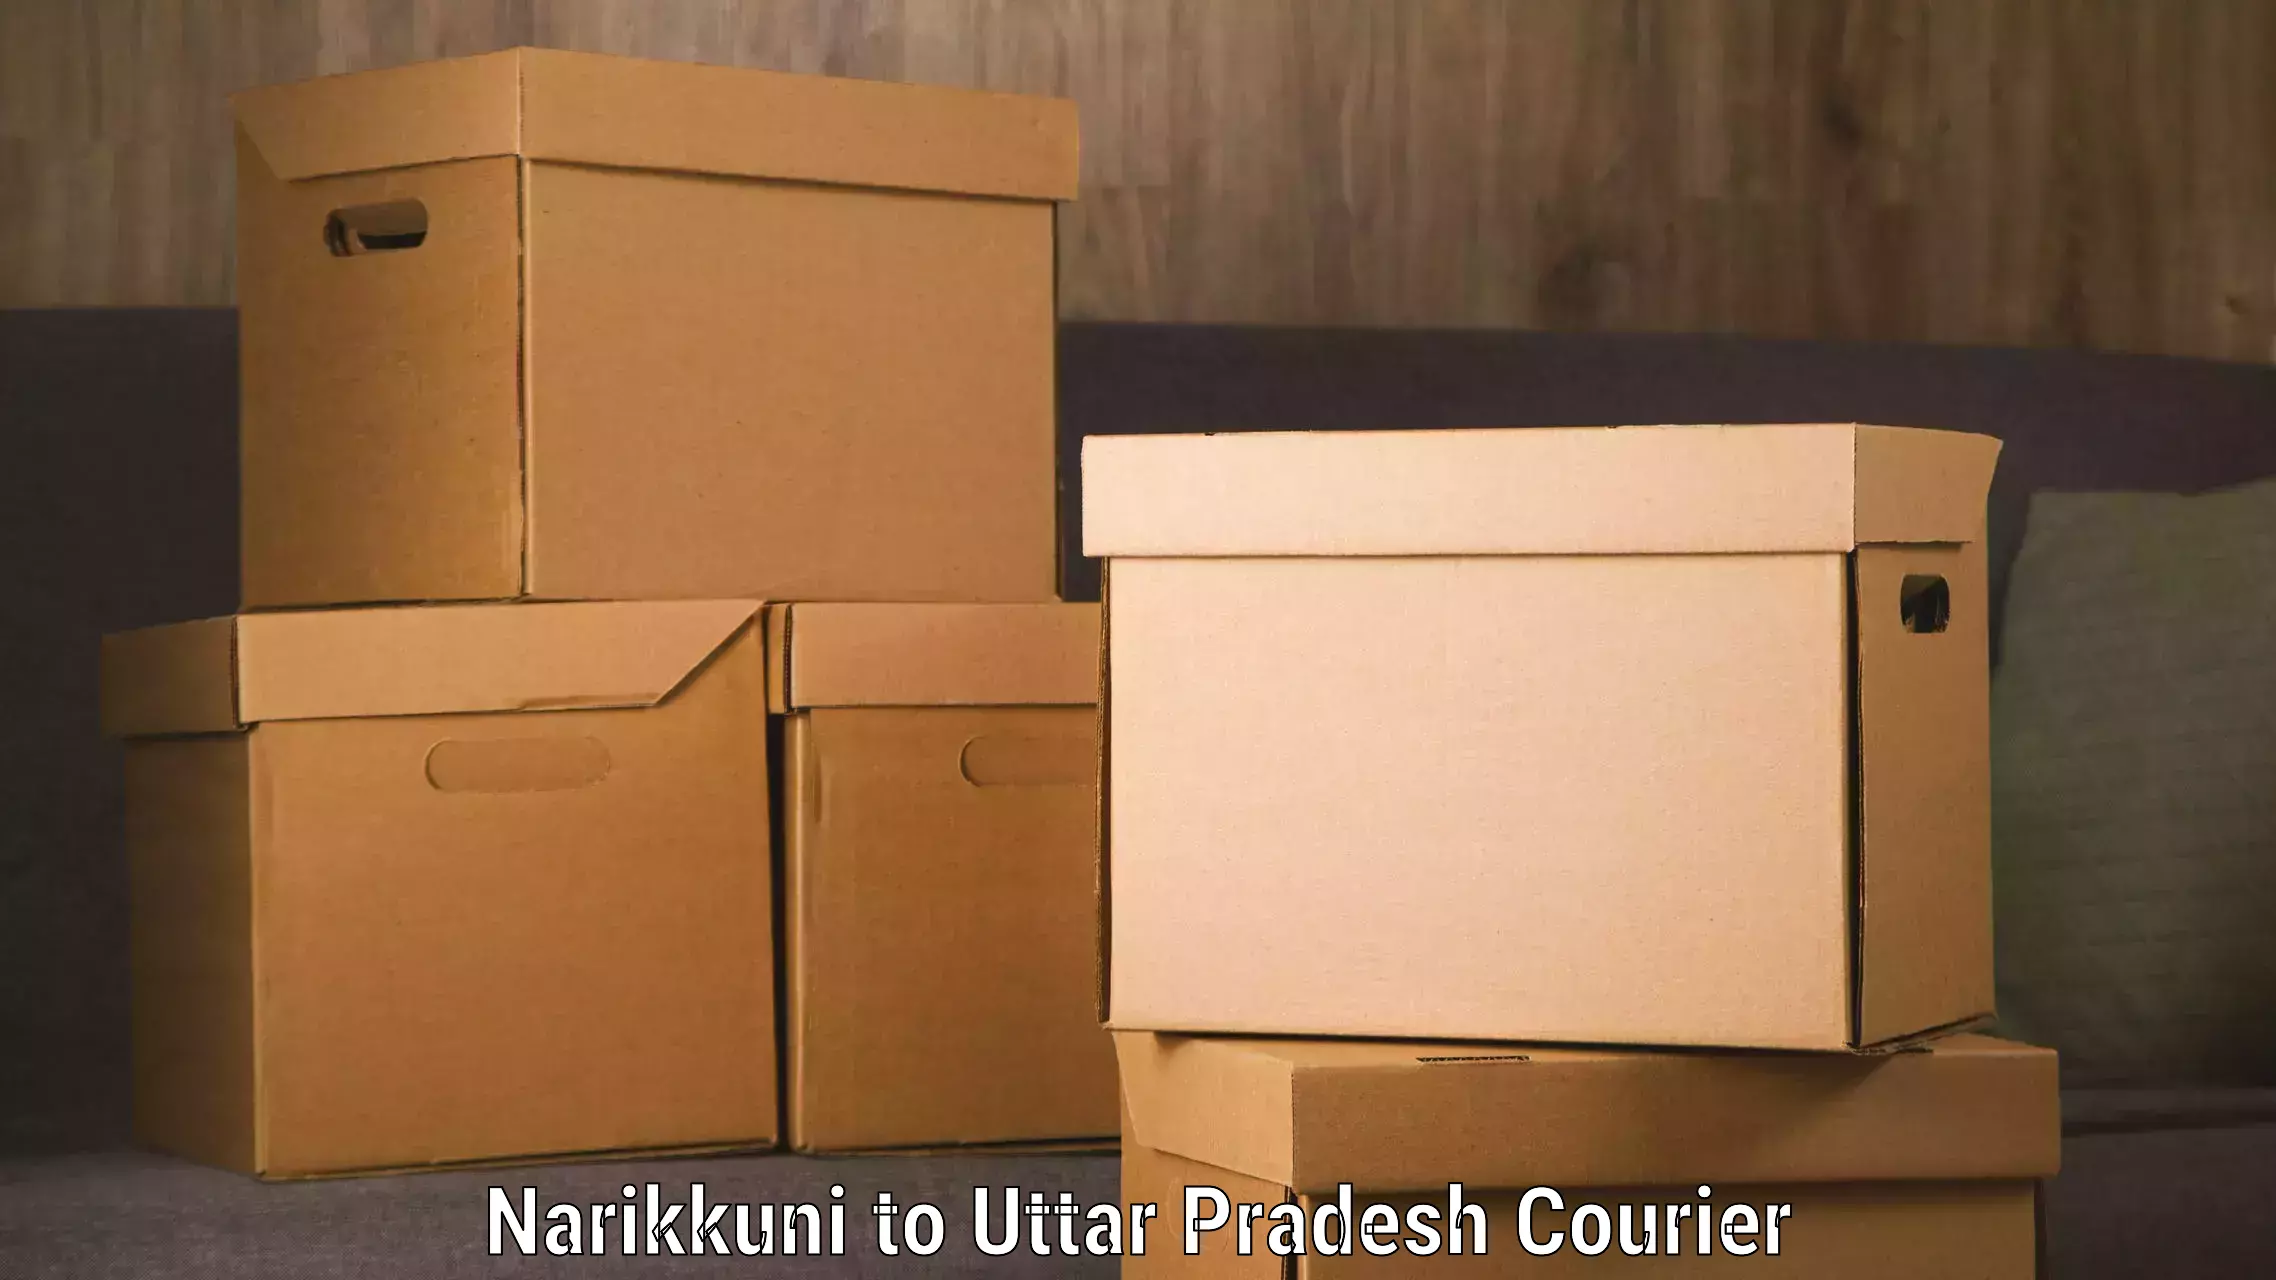 24-hour delivery options in Narikkuni to Uttar Pradesh